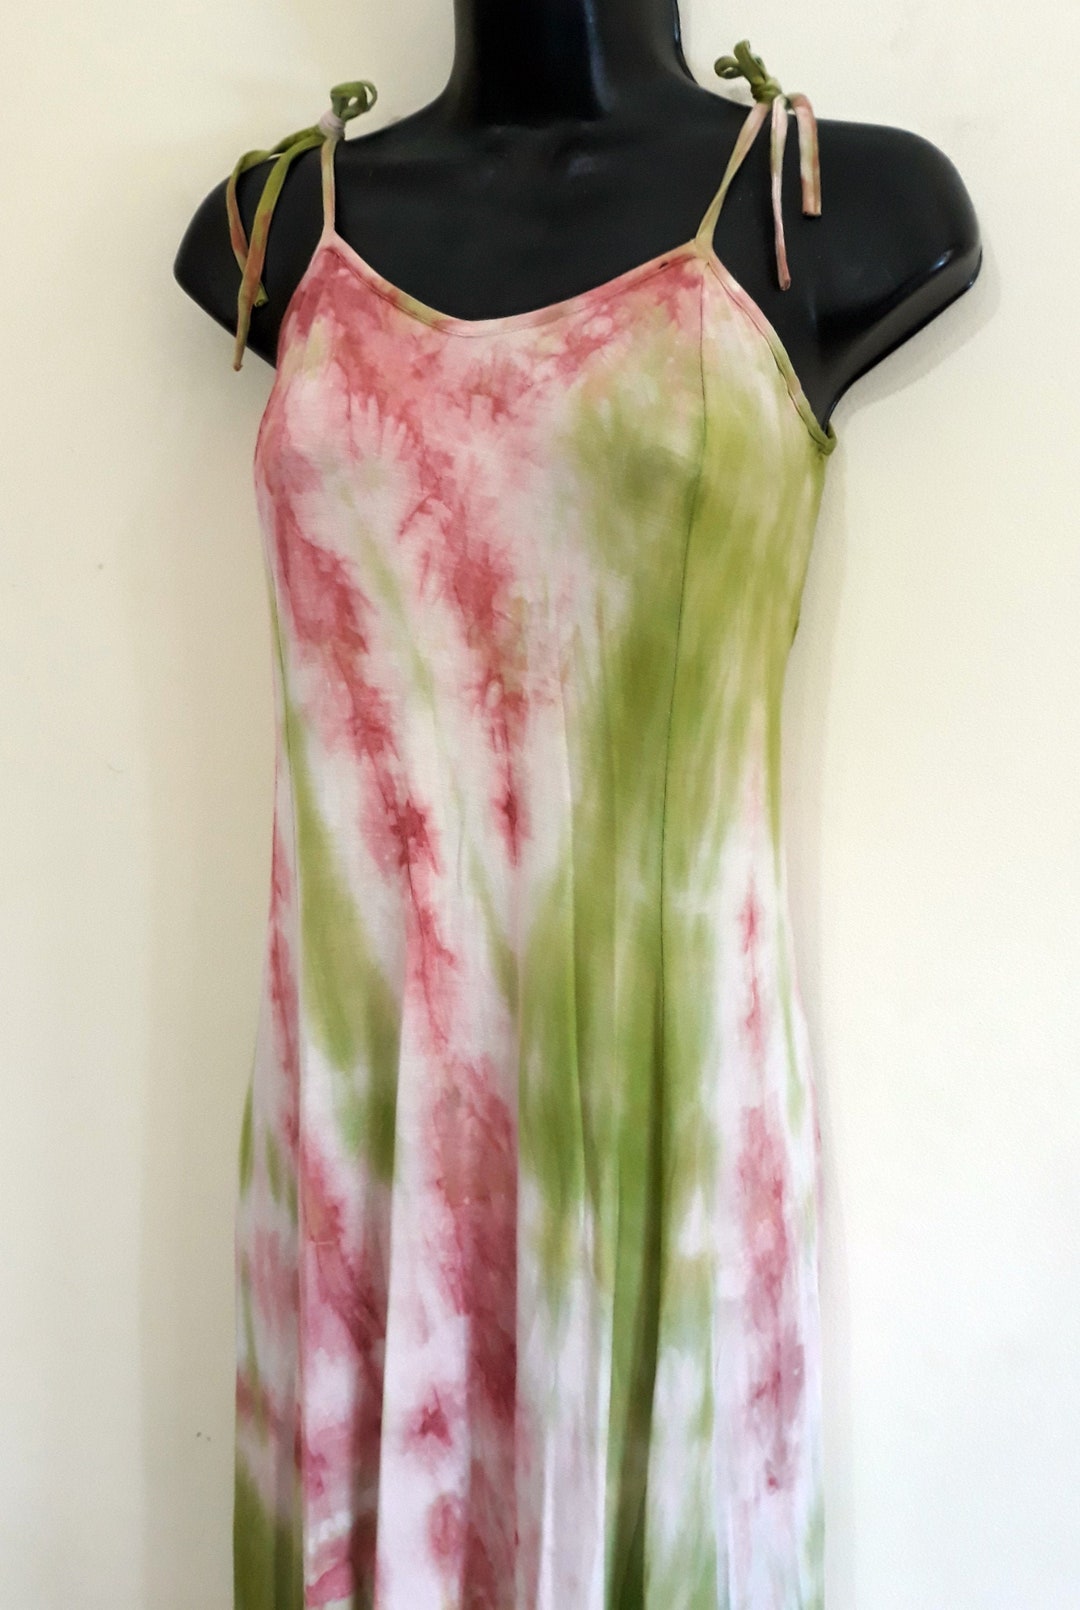 SOLUNA Spaggeti Straps Dress in a Silky Organic Bamboo Knit - Etsy